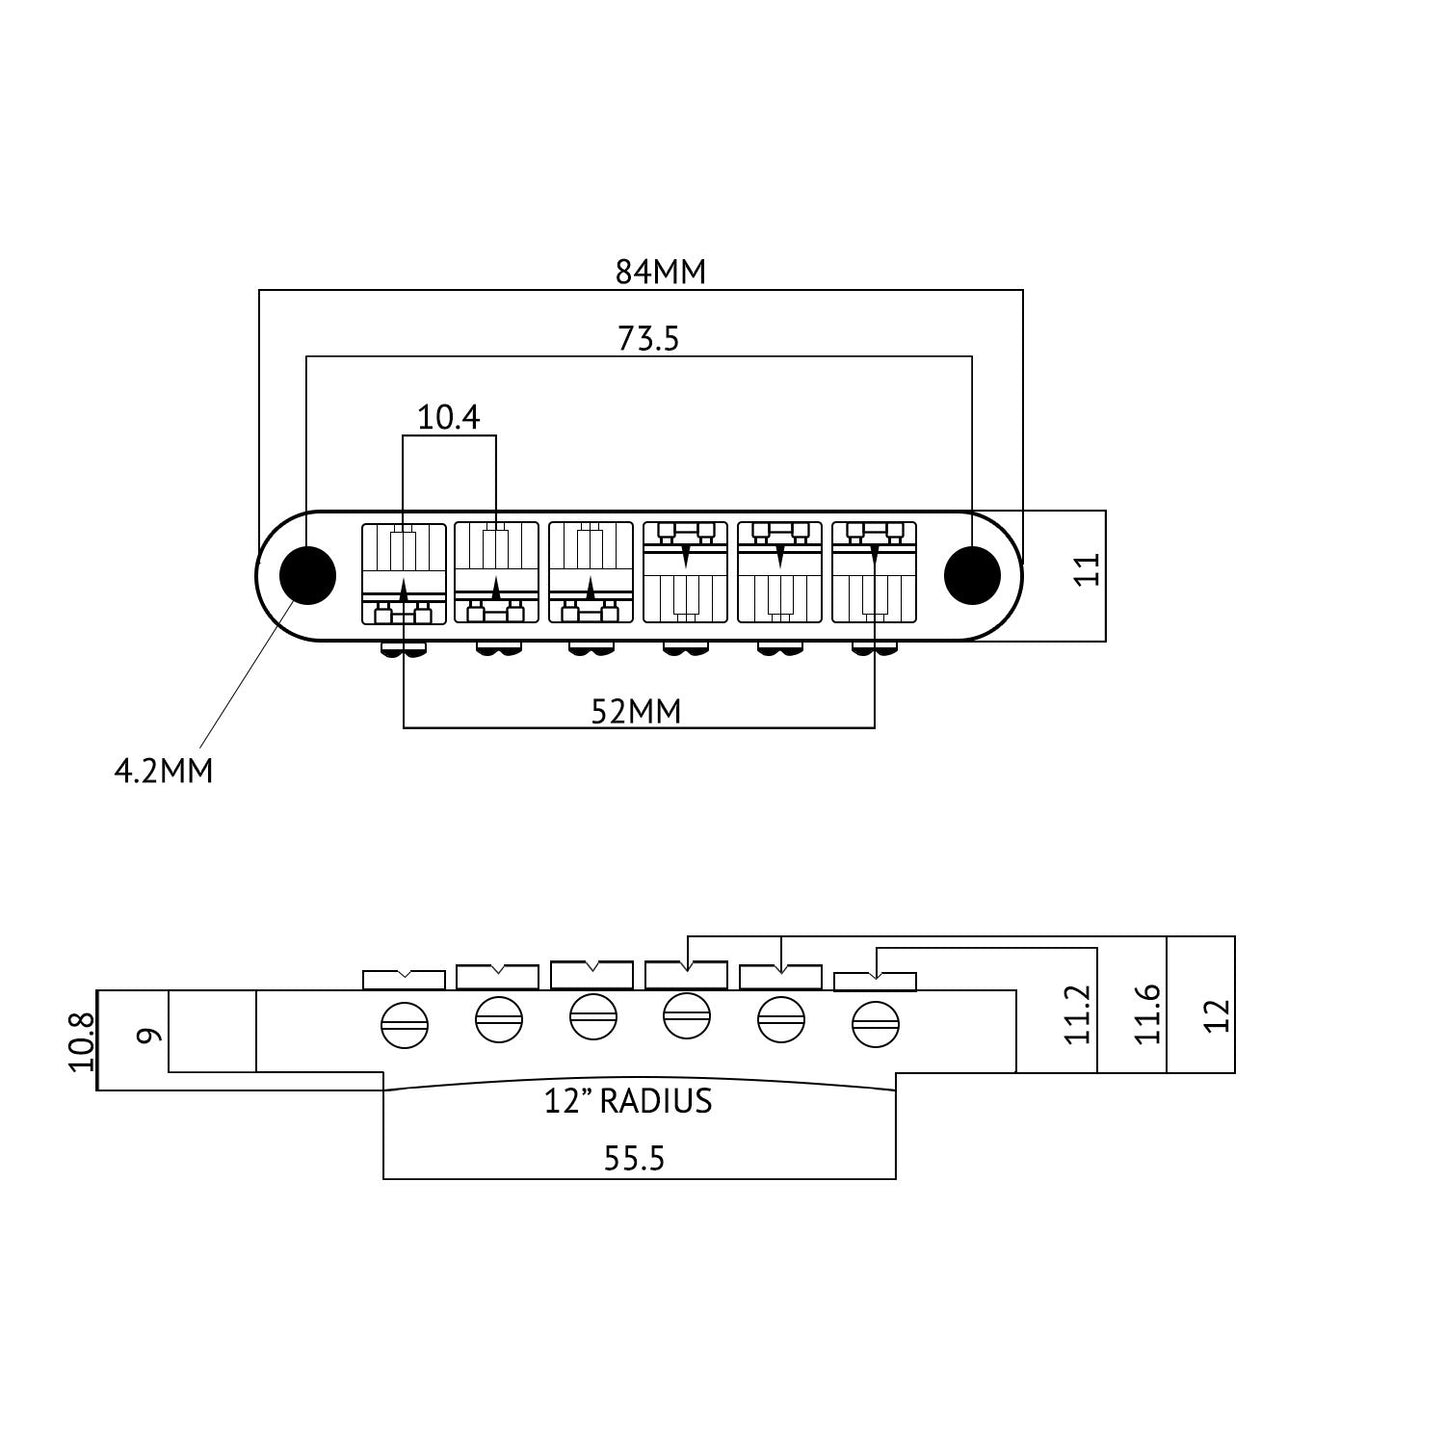 ABR-1 Style Tune-o-matic Bridge to fit Gibson Les Paul SG ES Dot